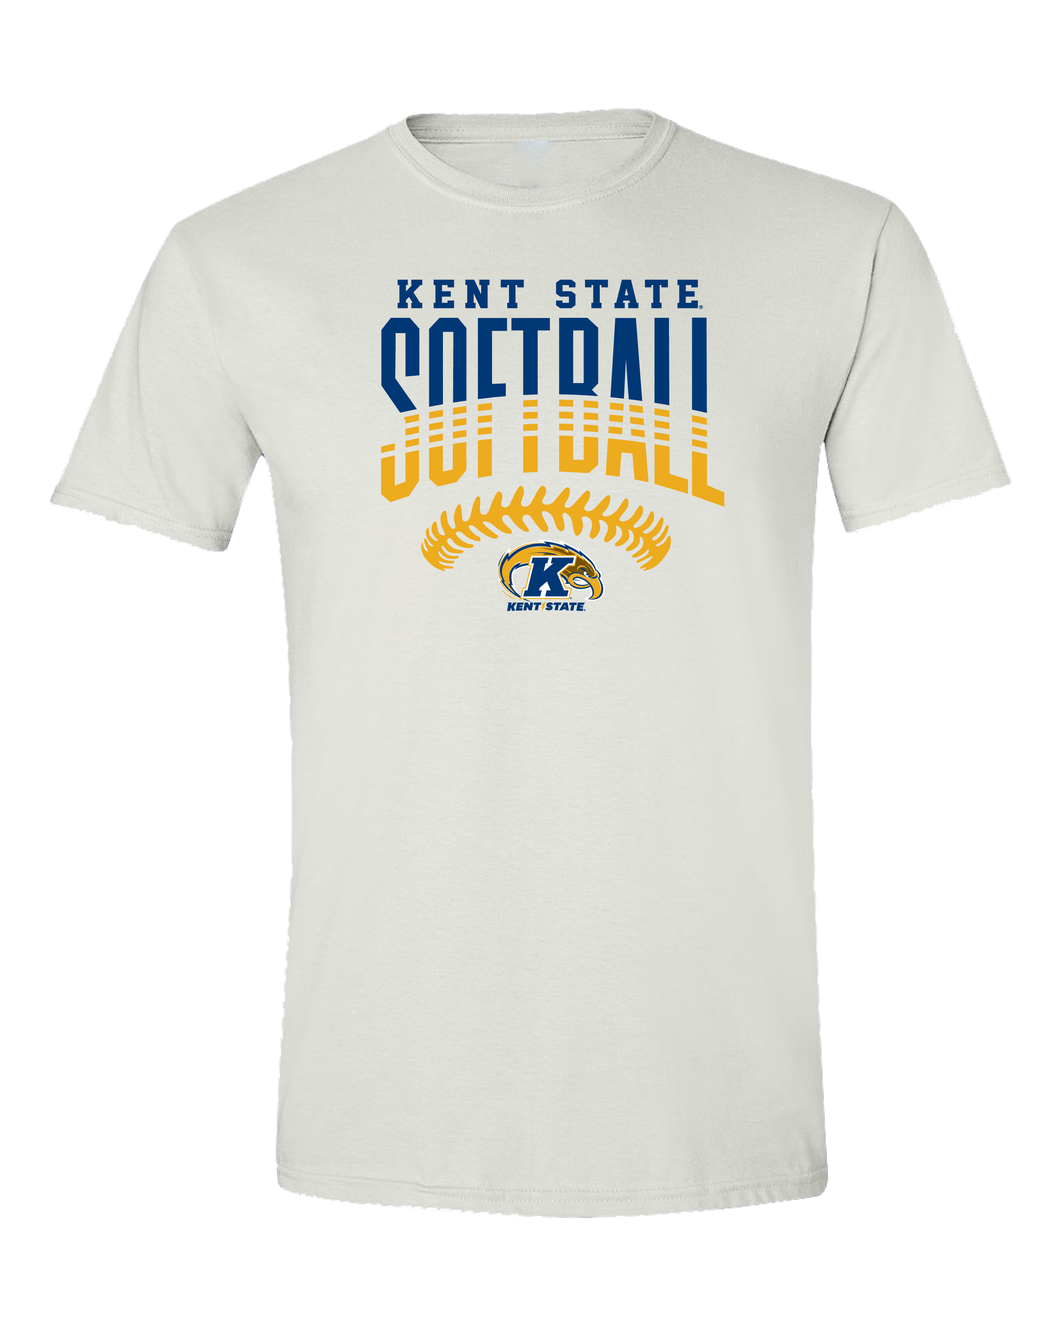 Kent State Softball Unisex T-shirt